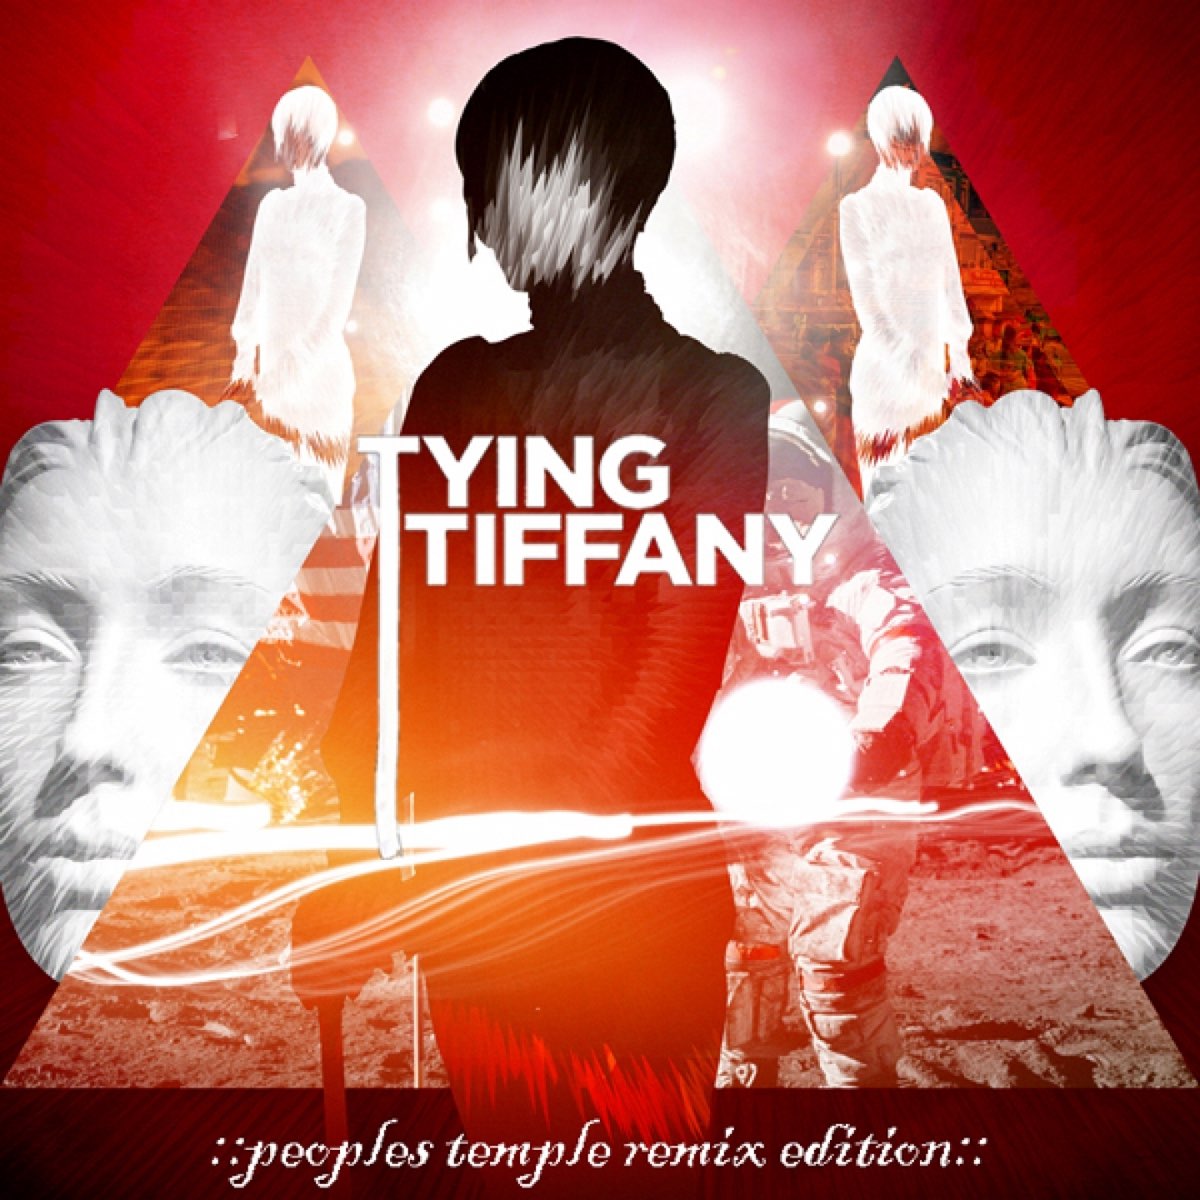 Temple remix. Tying Tiffany. Tying Tiffany Drop. Tying Tiffany album,. Into the Light tying Tiffany.